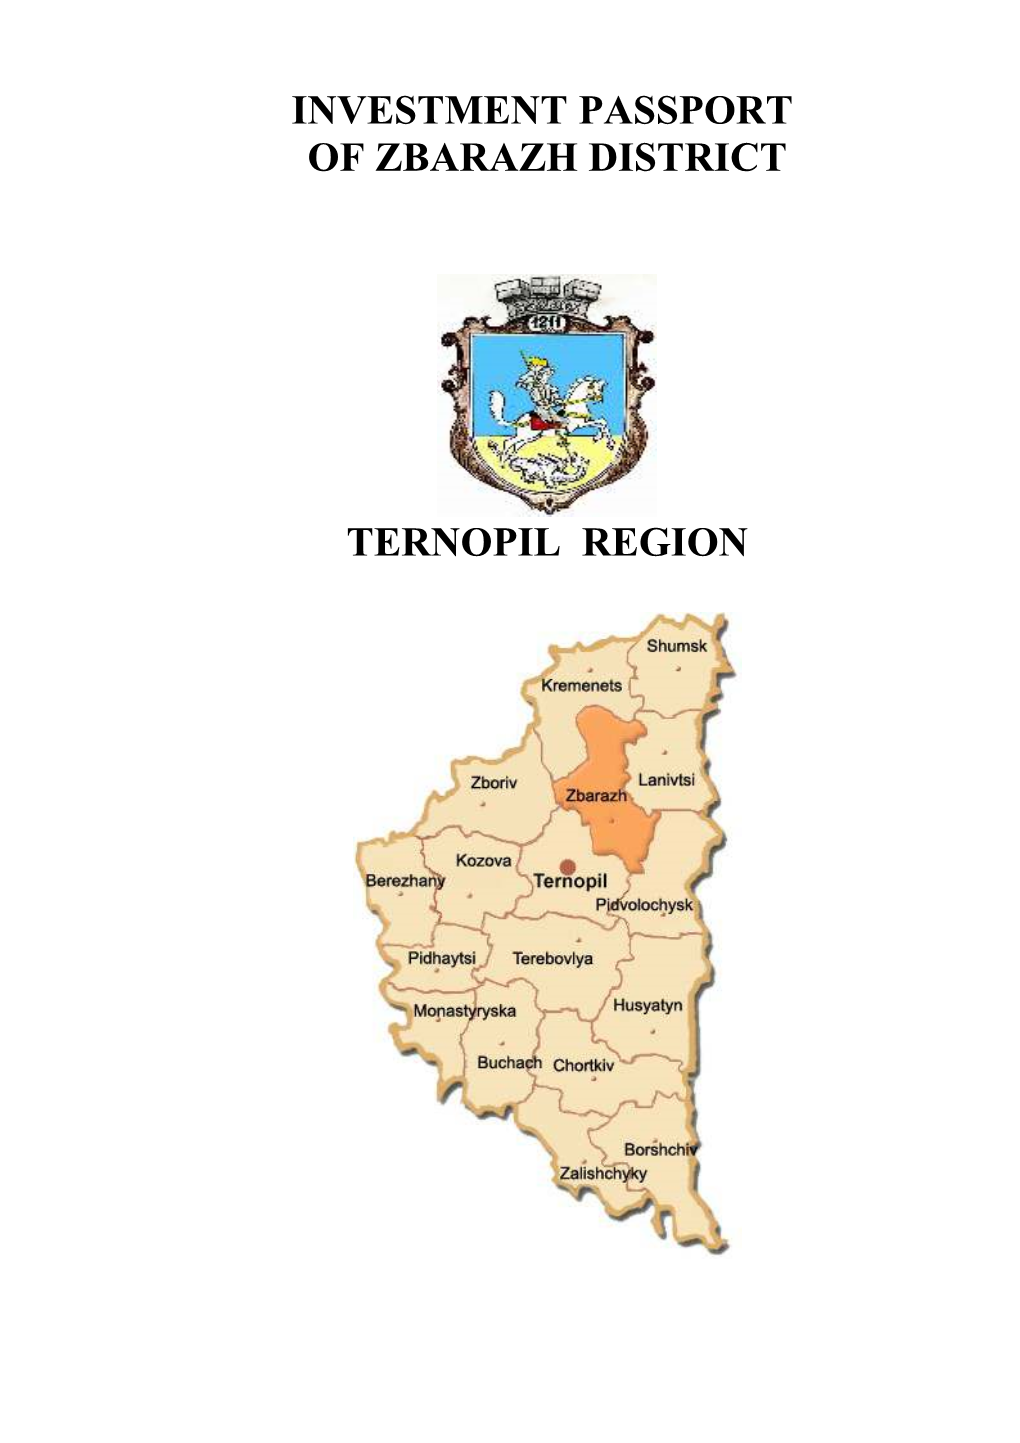 Investment Passport of Zbarazh District Ternopil